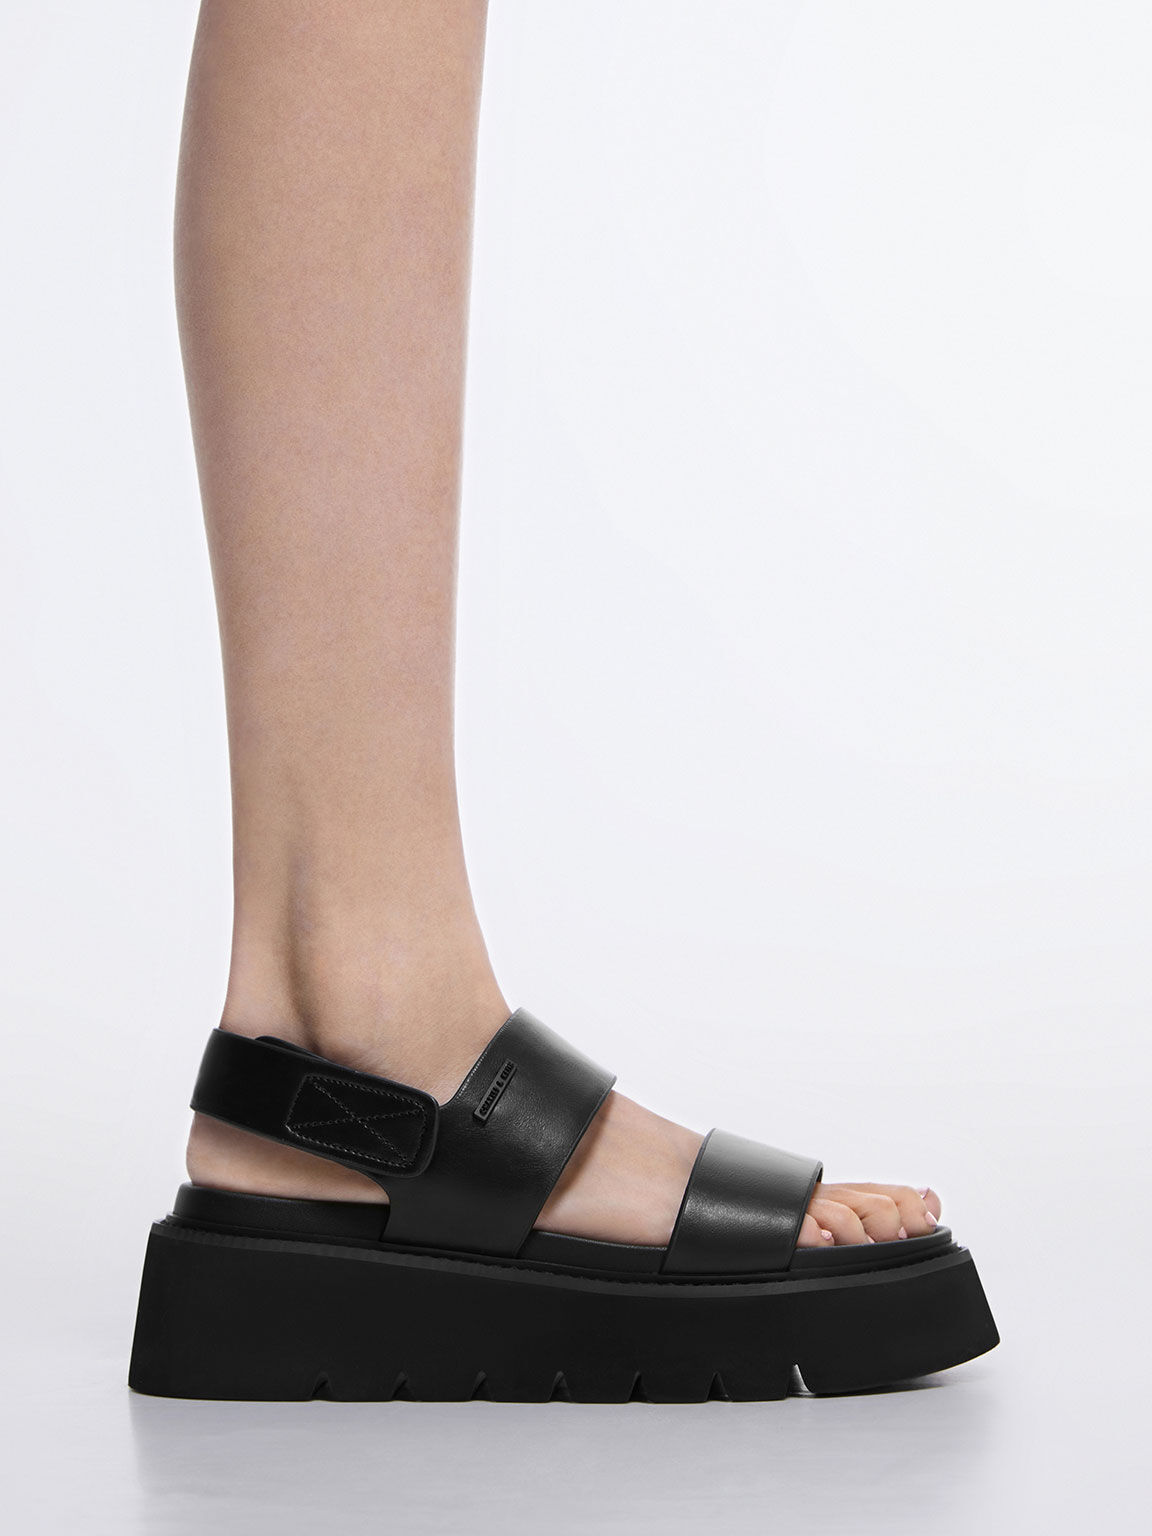 VKEKIEO Open Toe Cushionaire Sandals Women Low Heel Platform Black -  Walmart.com